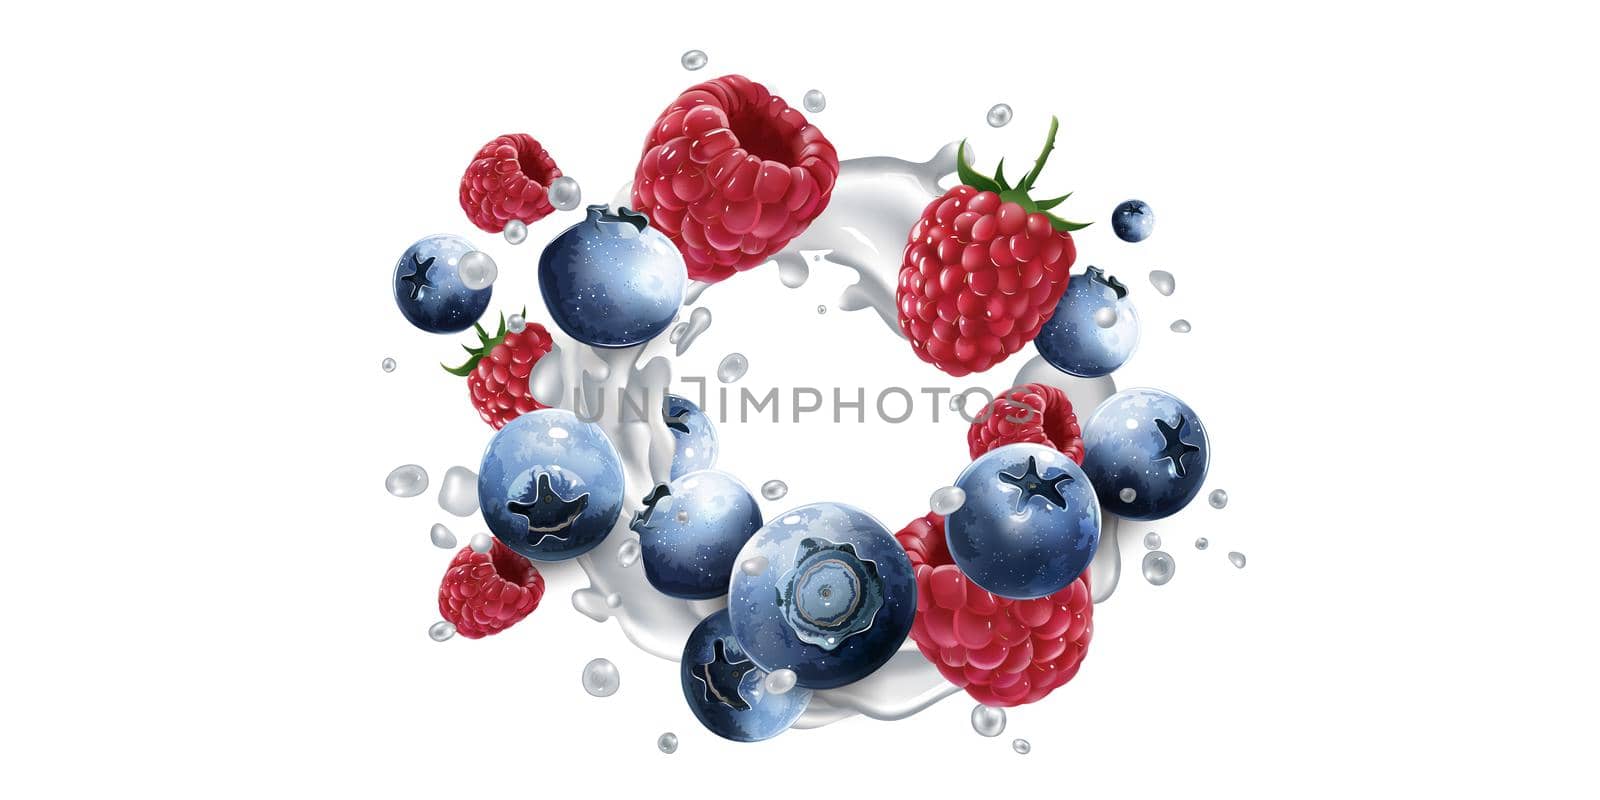 Blueberries and raspberries in splashes of yogurt or milk. by ConceptCafe